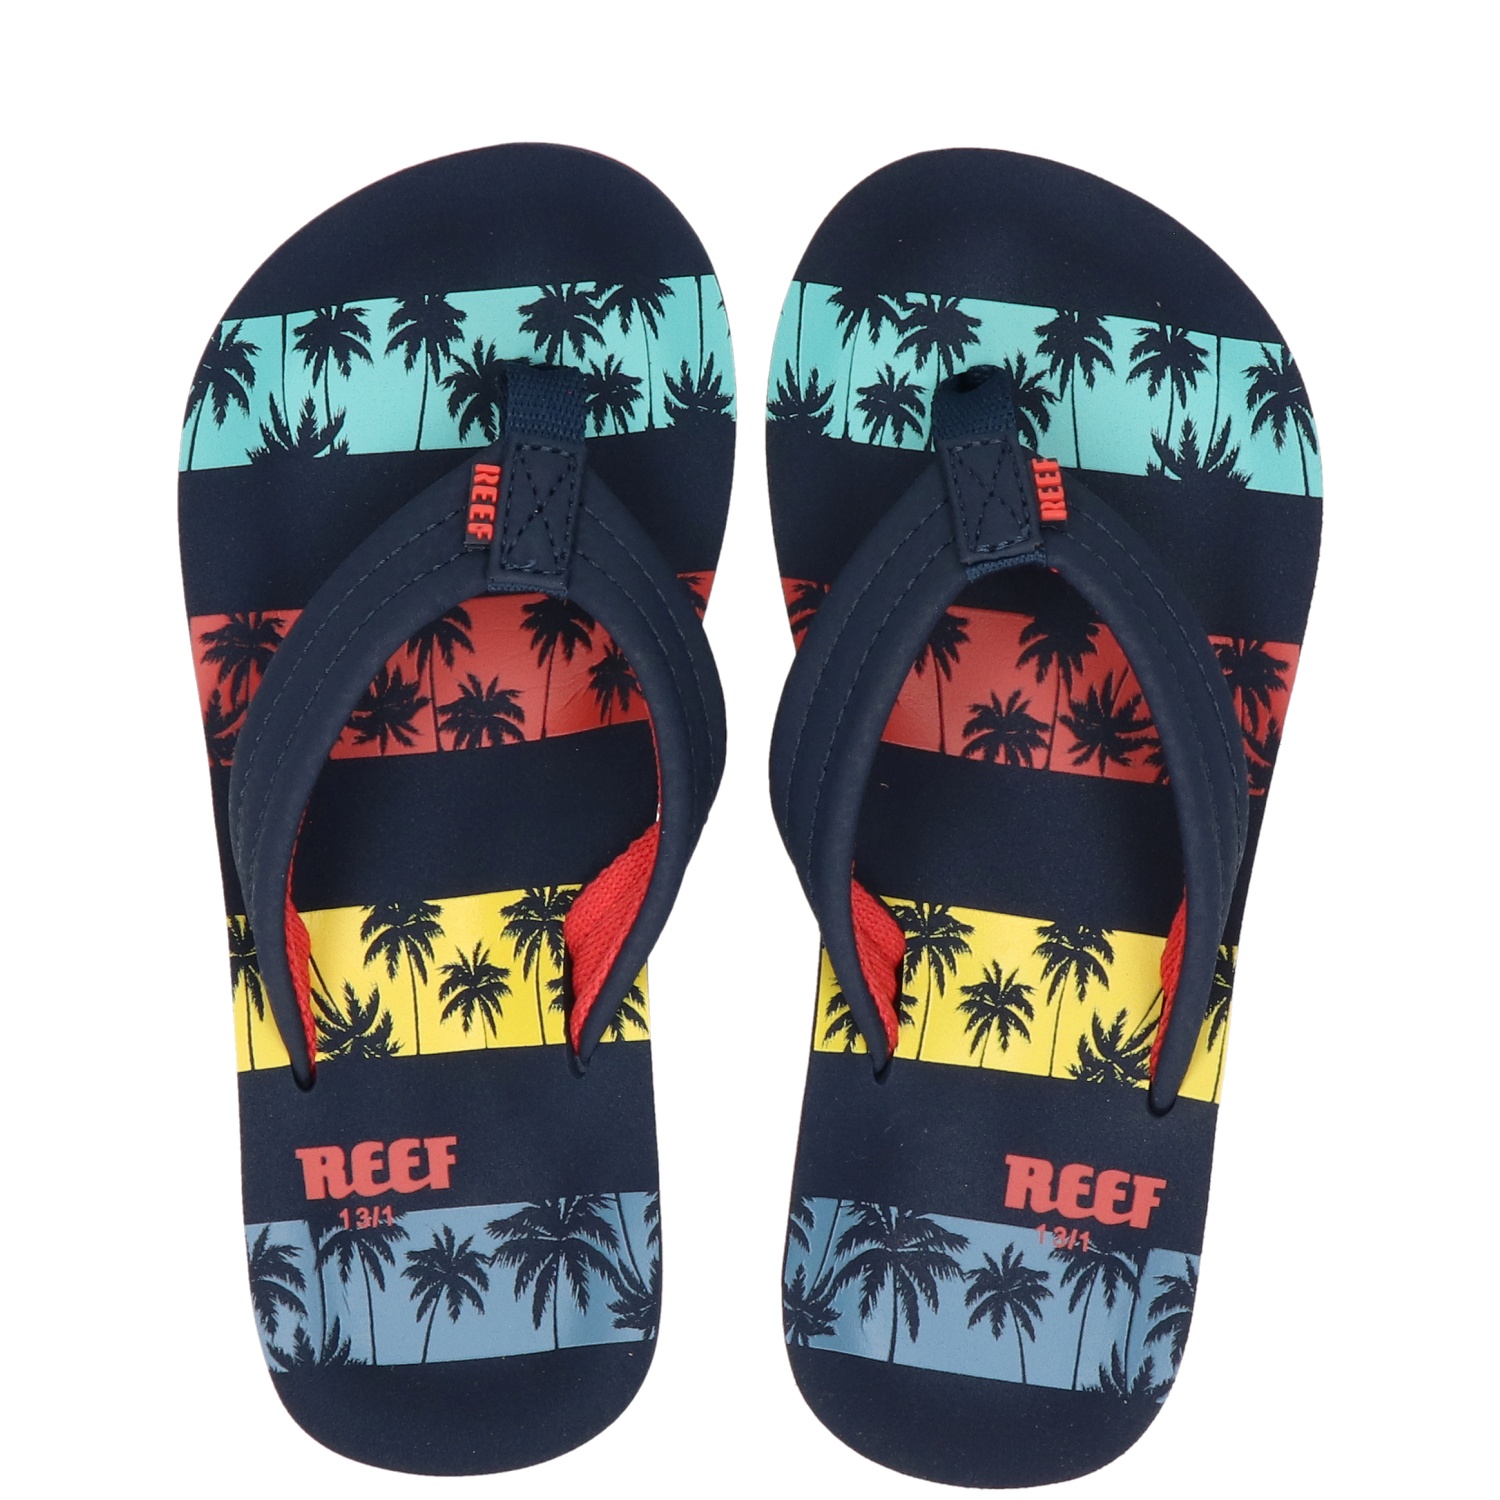 Reef Ahi slippers